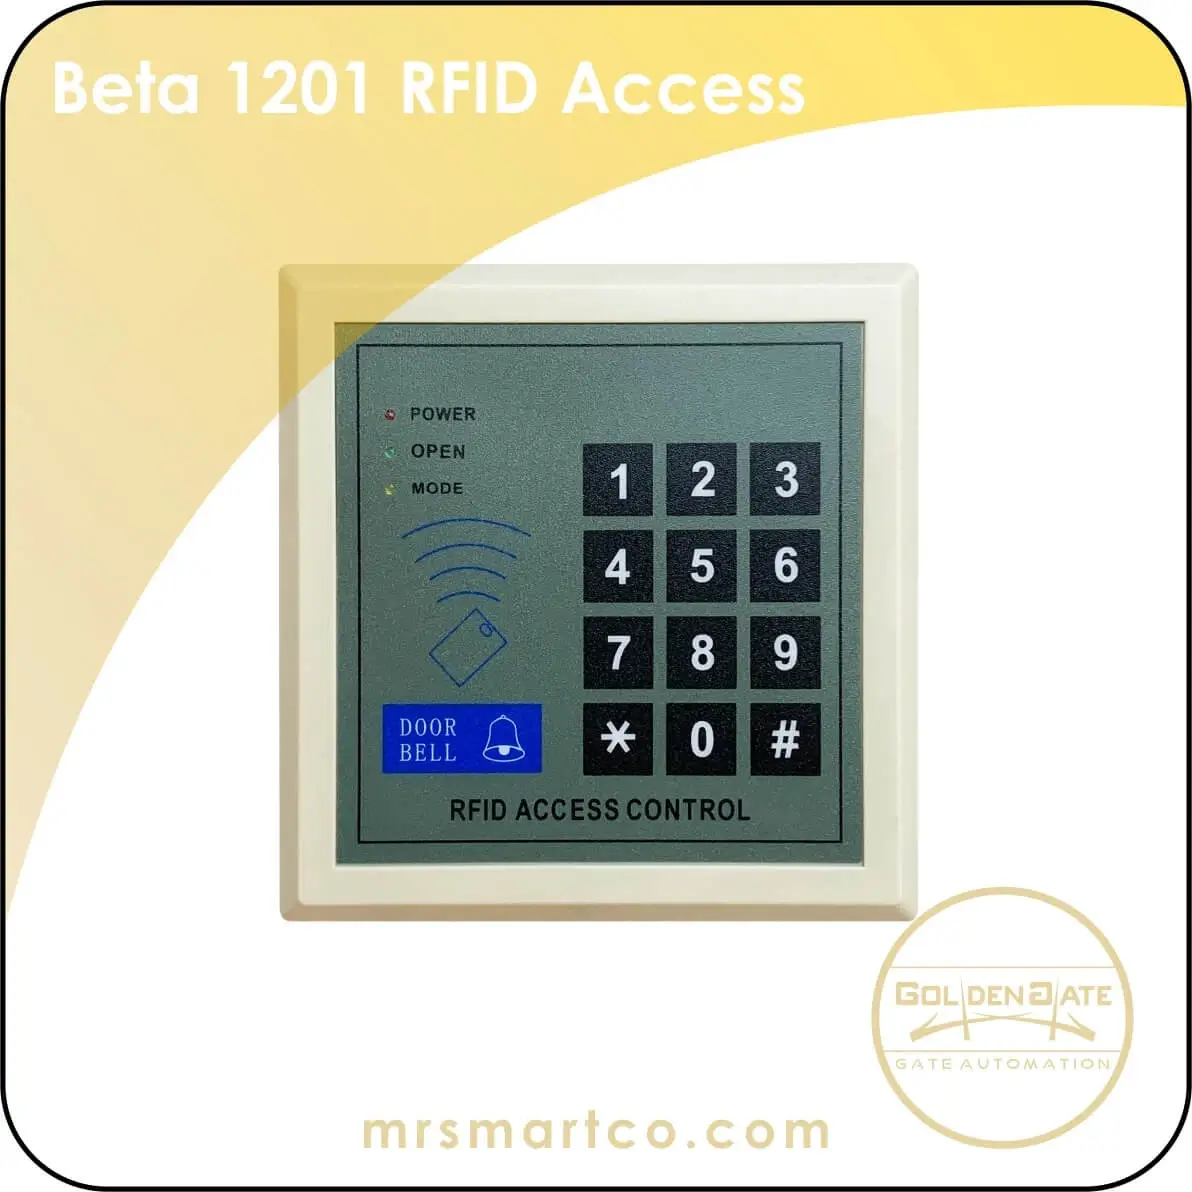 Beta 1201 Access Control